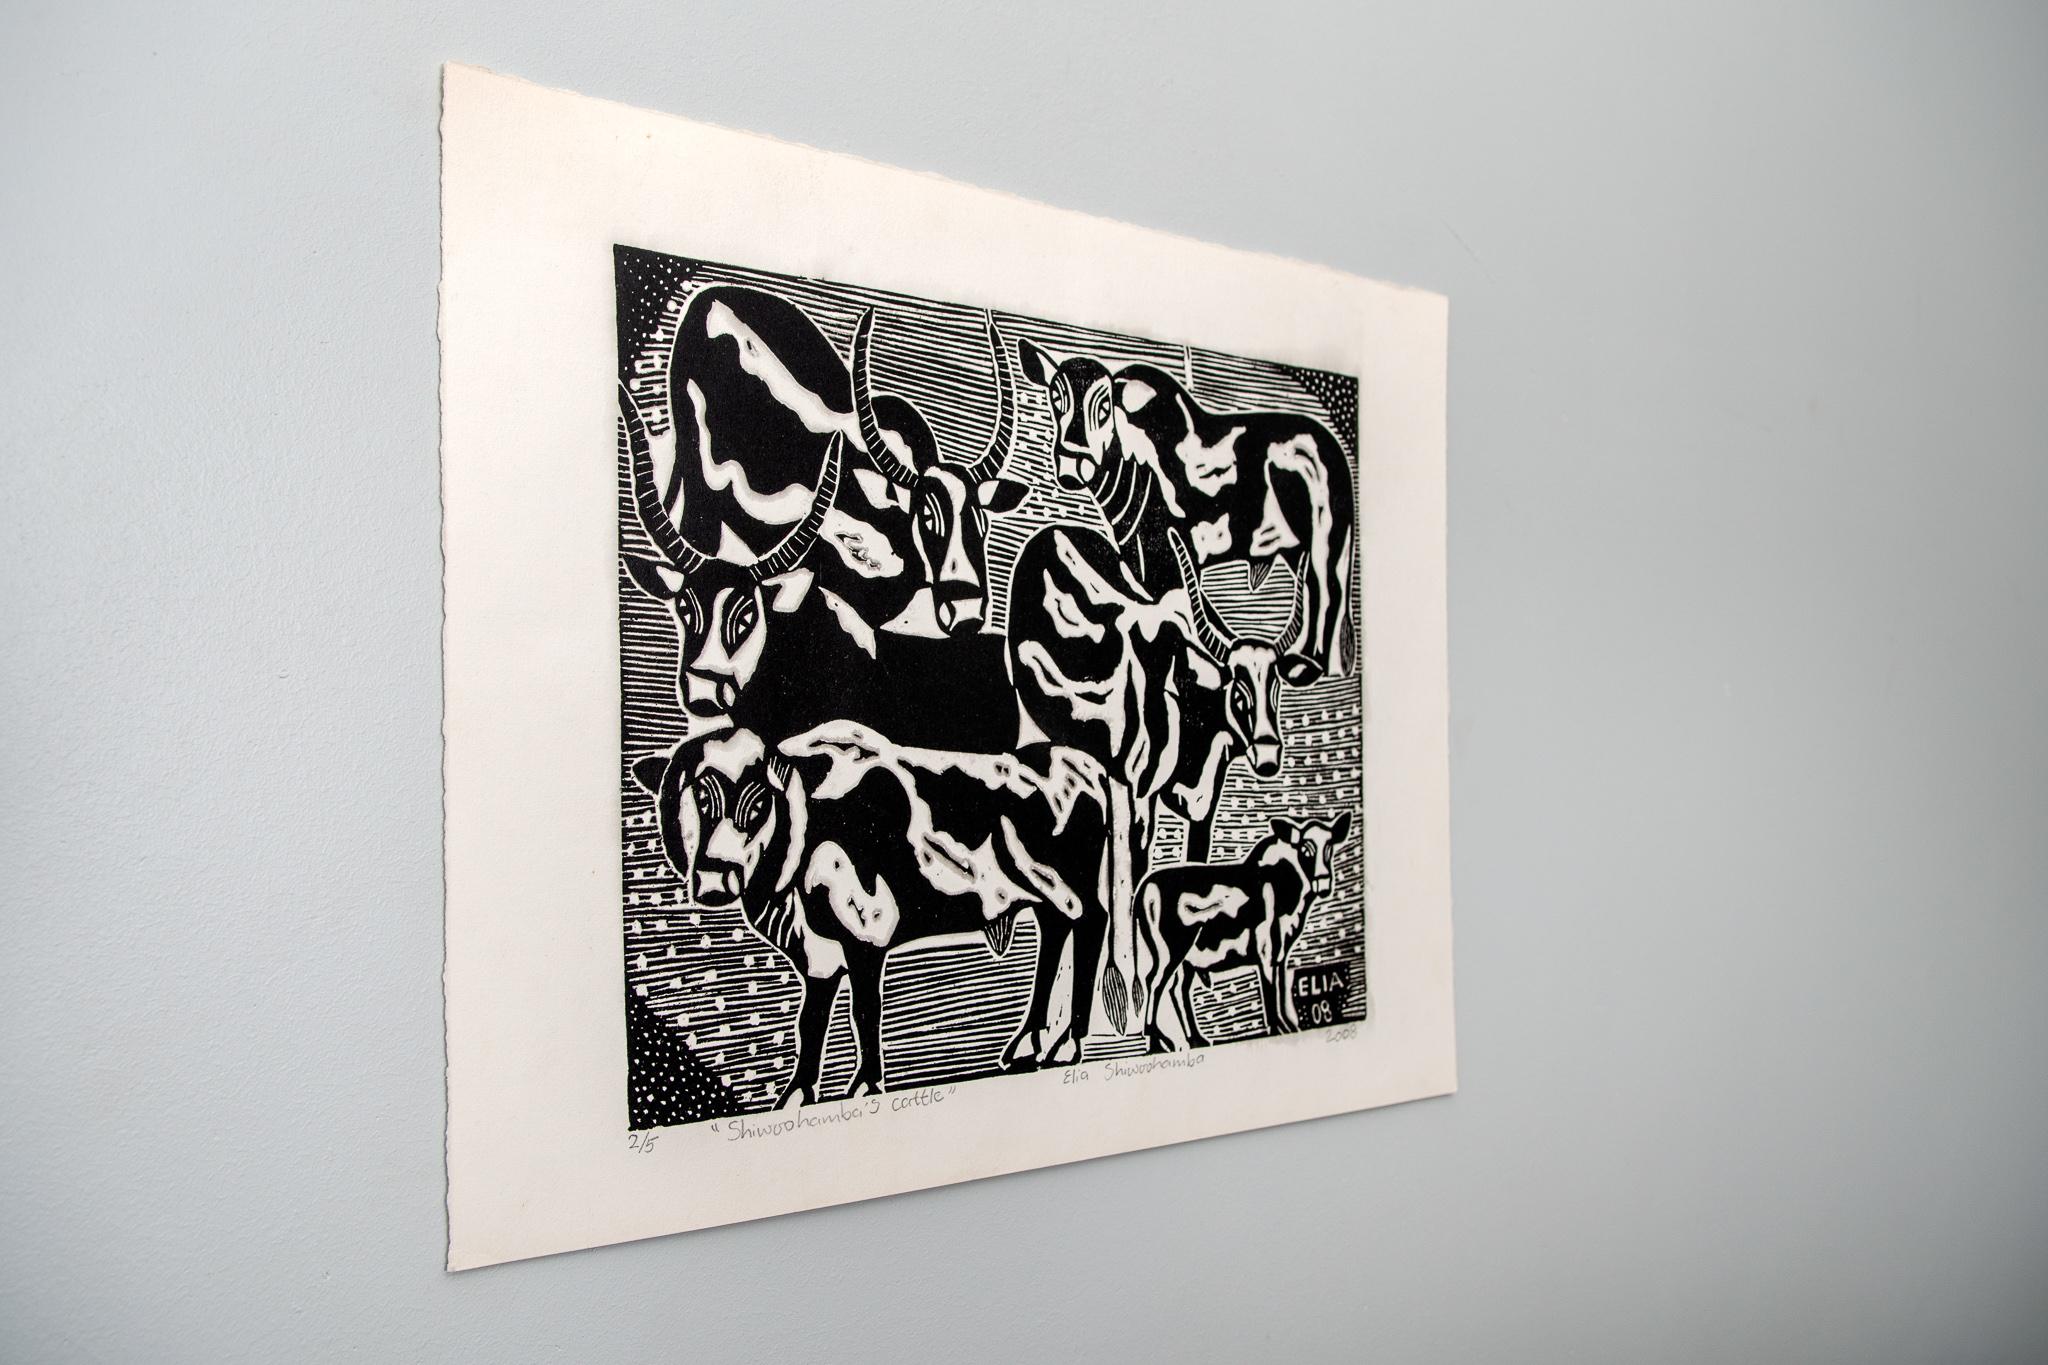 Shiwoohamba's Cattle, Elia Shiwoohamba, Linoleum block print on paper 2